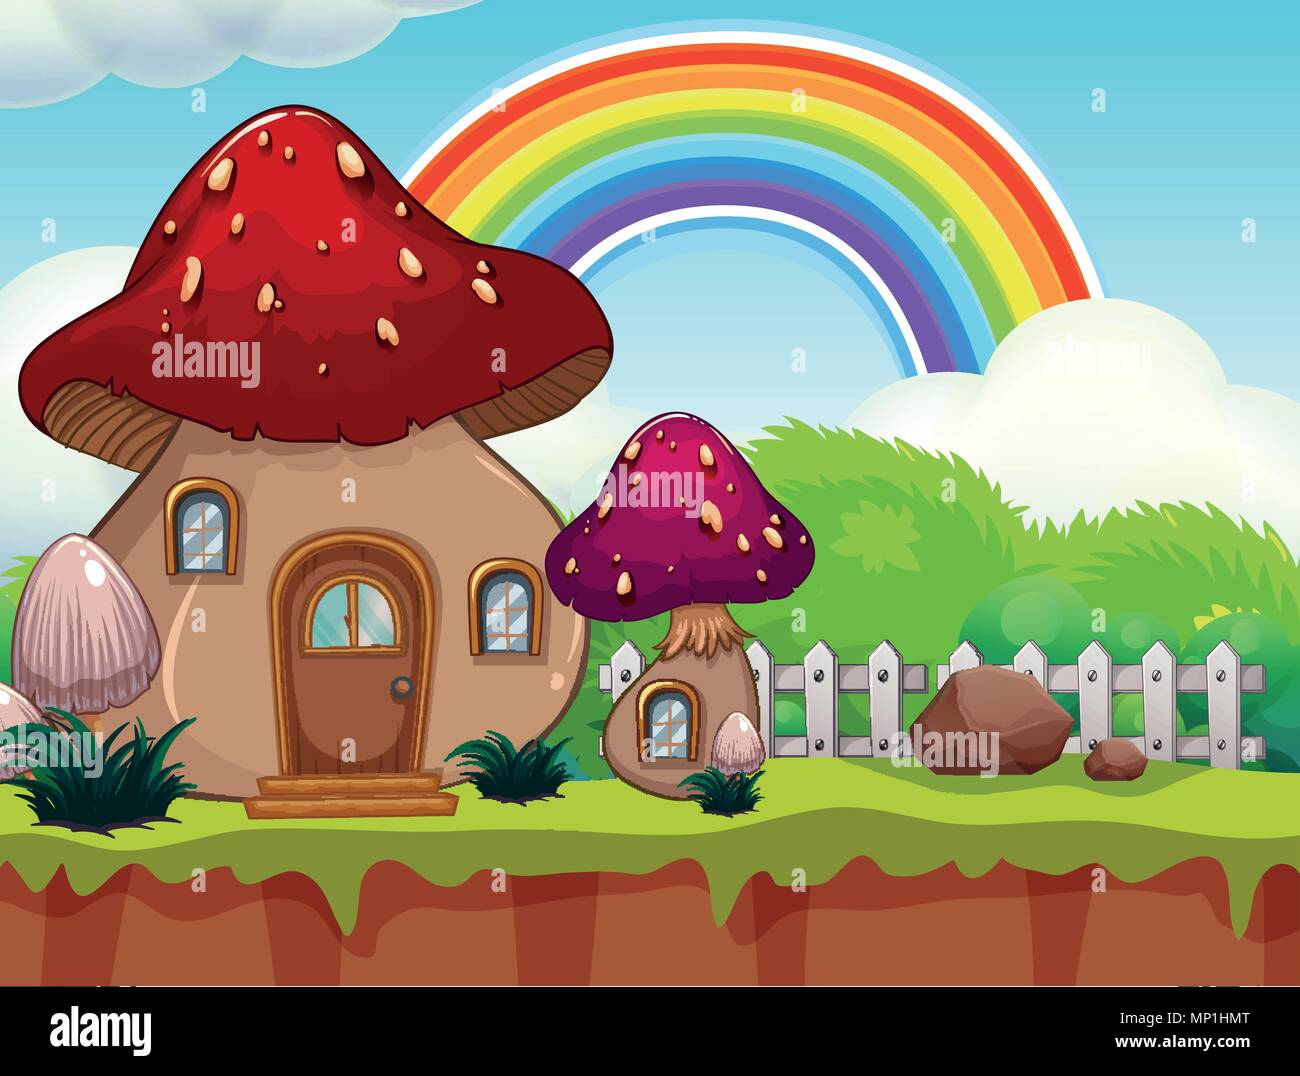 A Cute Cartoon Mushroom House illustration Stock Vector